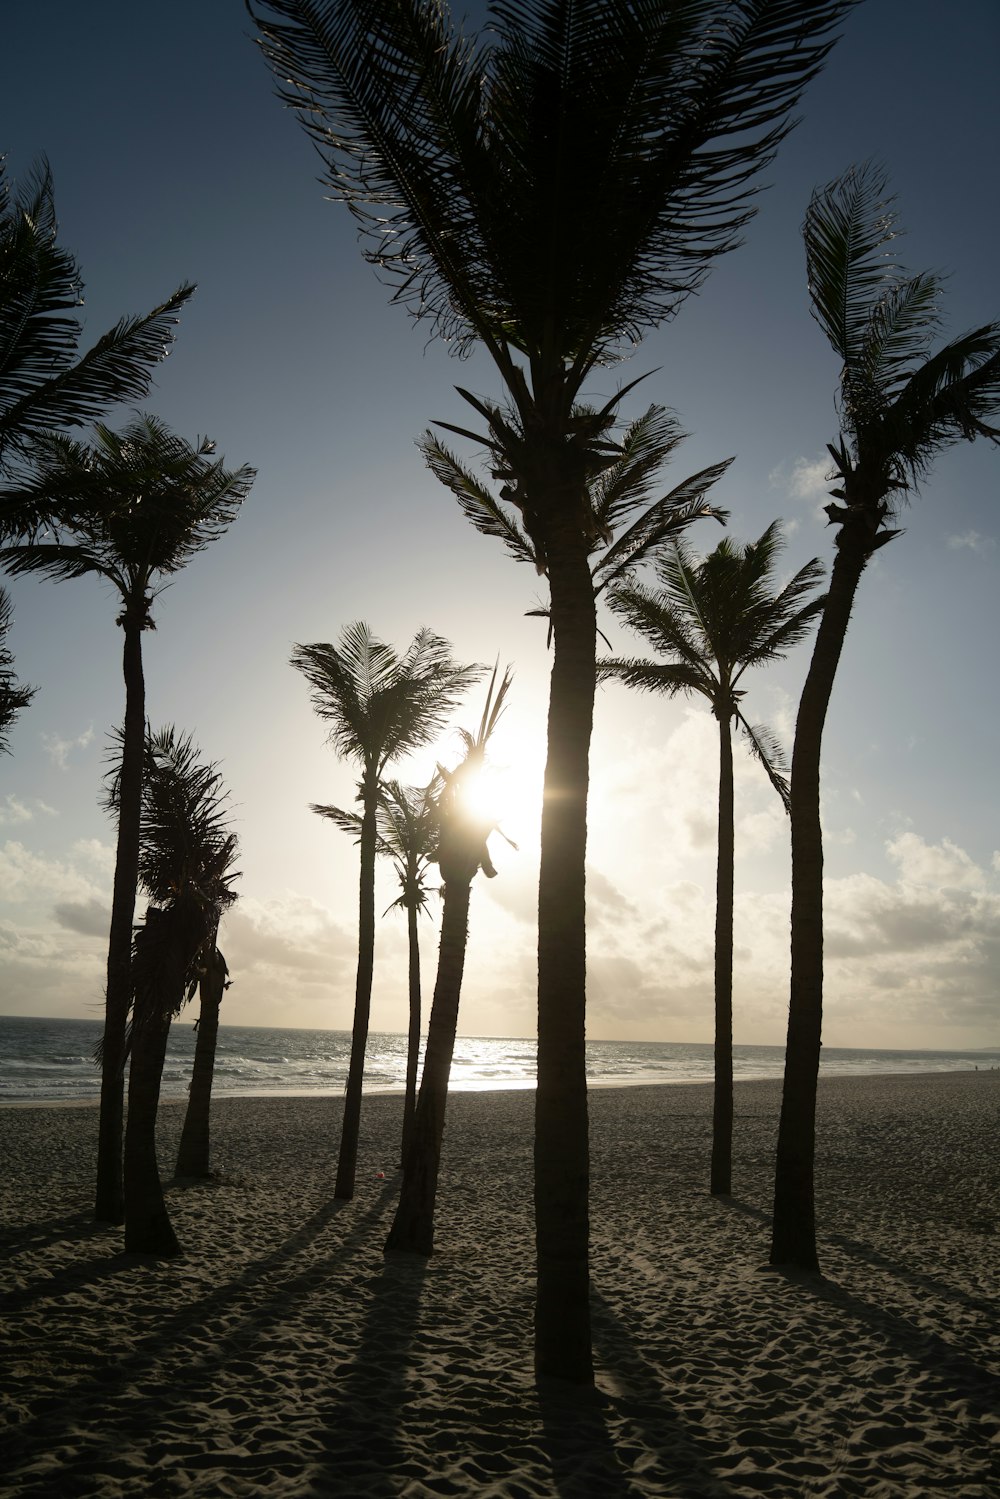 the sun shines through the palm trees on the beach